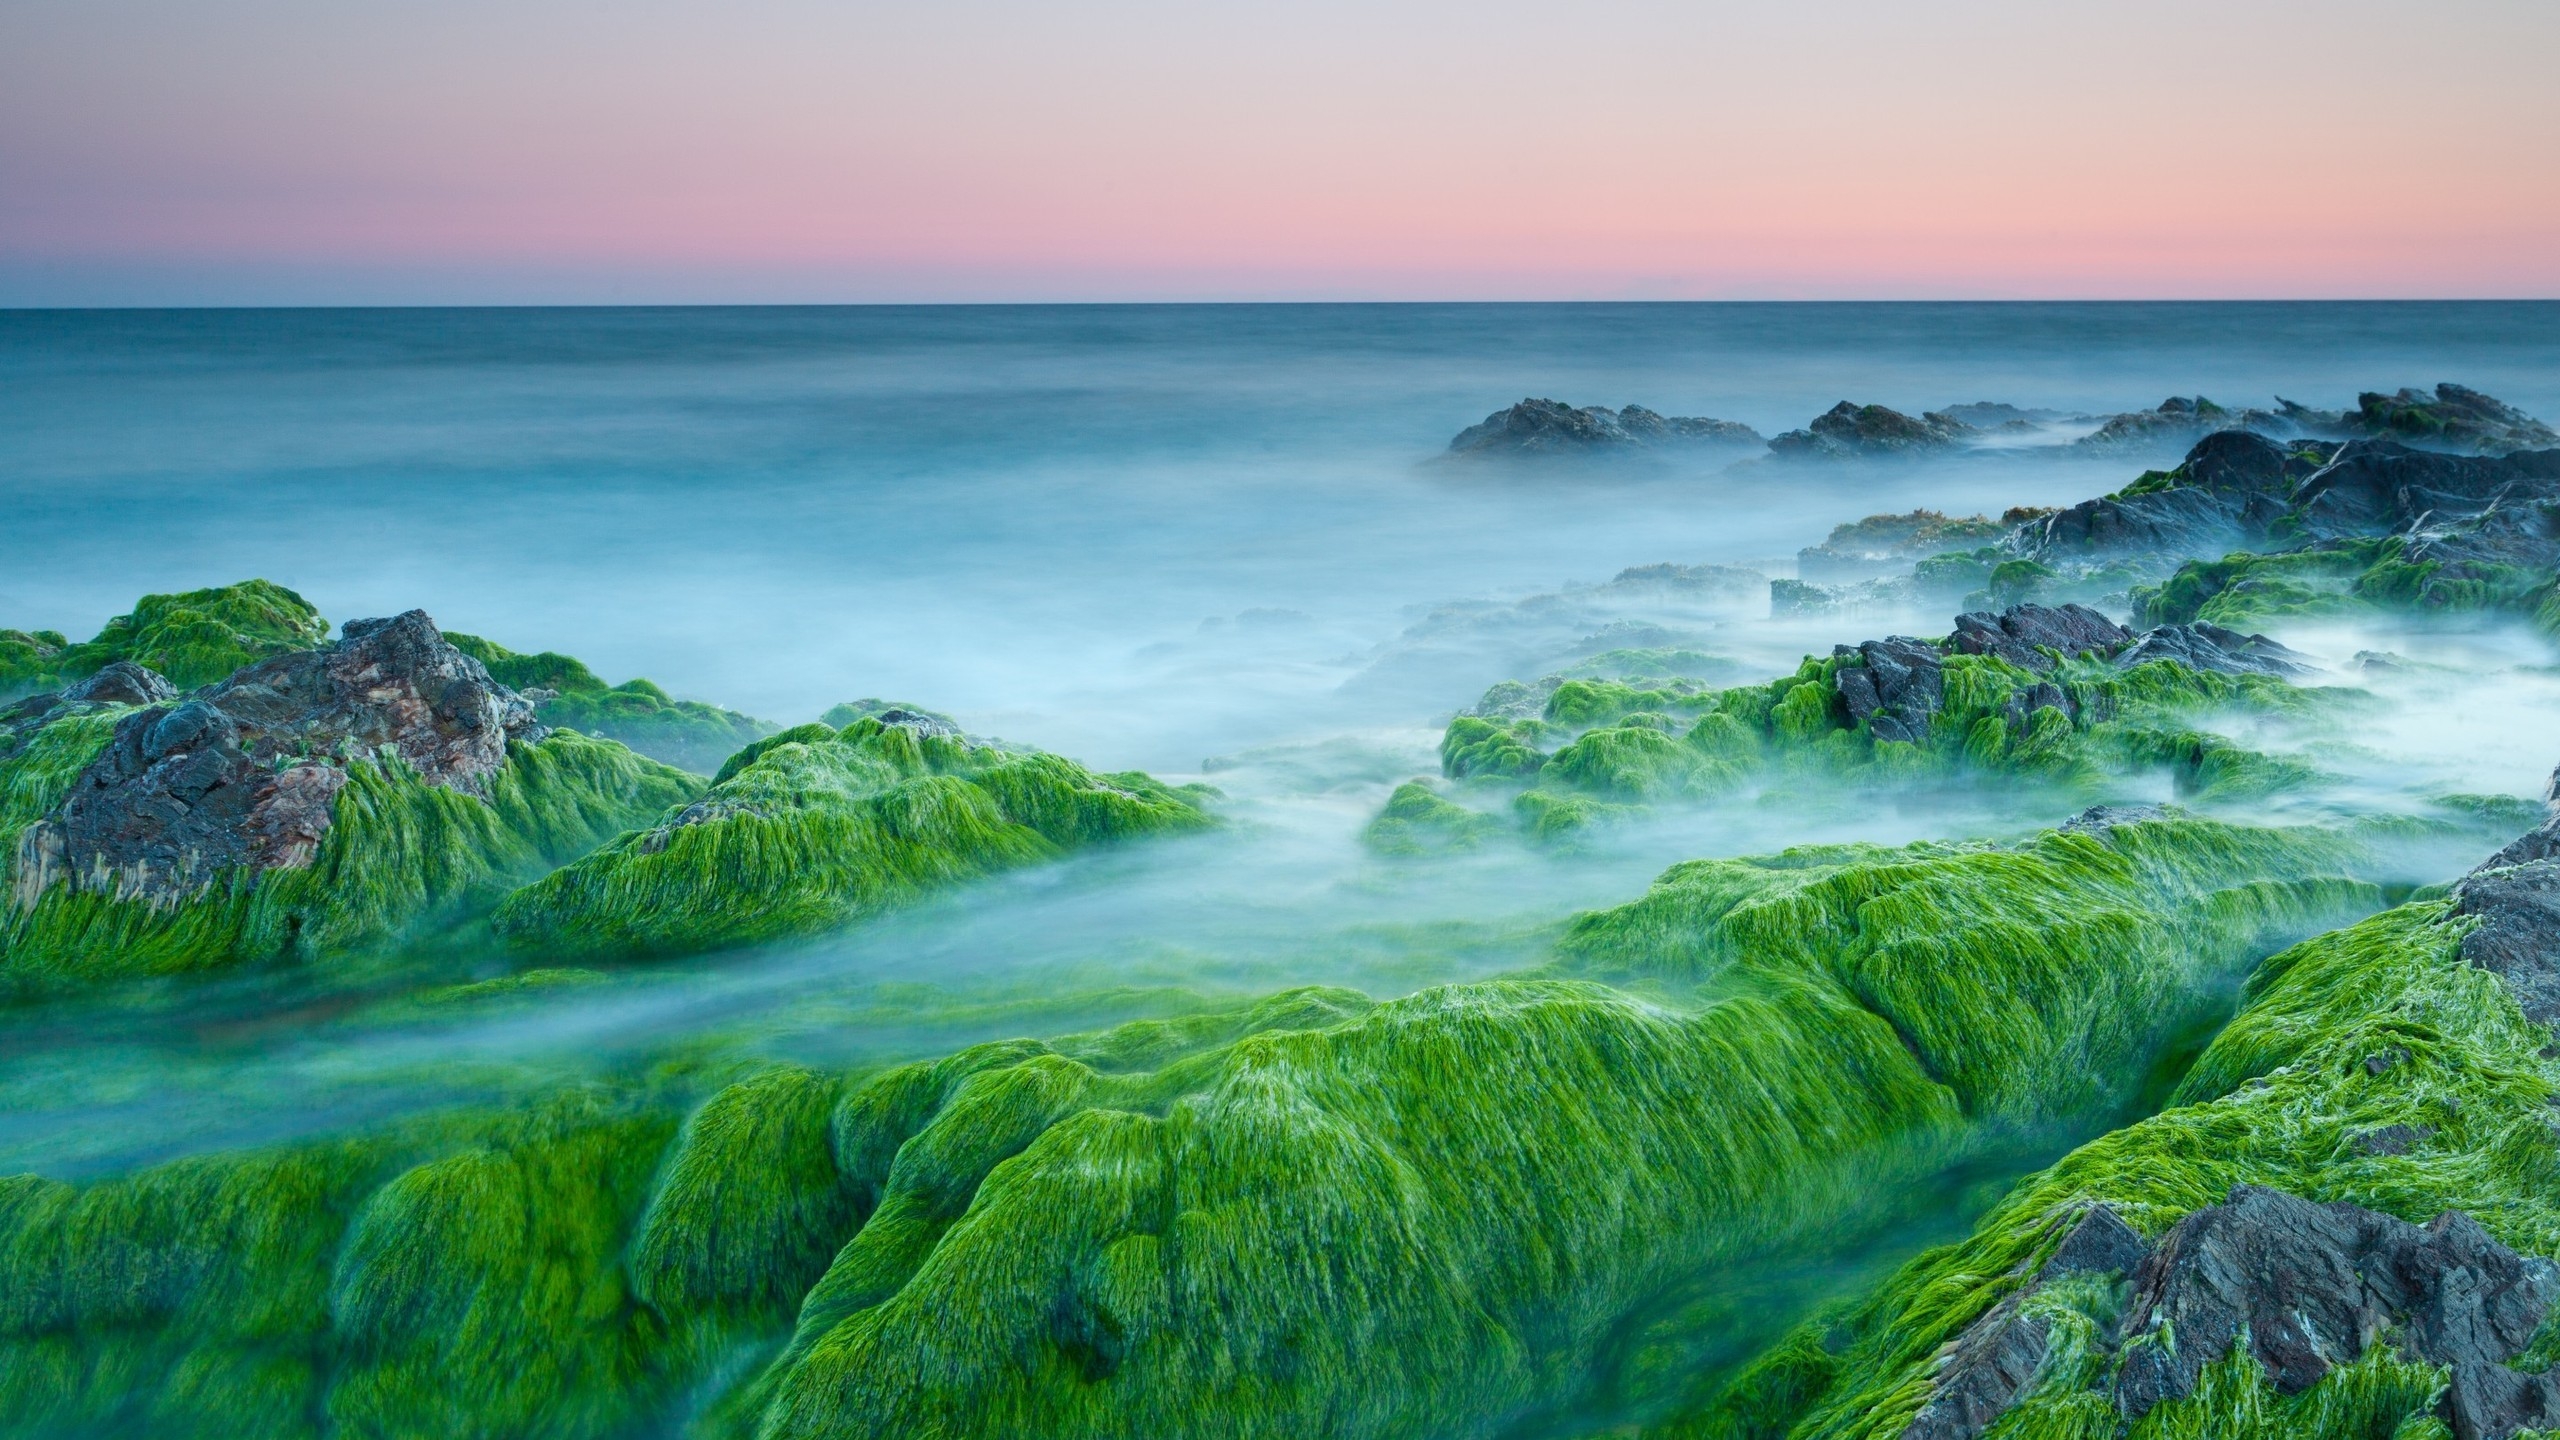 Green Algae On Rocks for 2560x1440 HDTV resolution